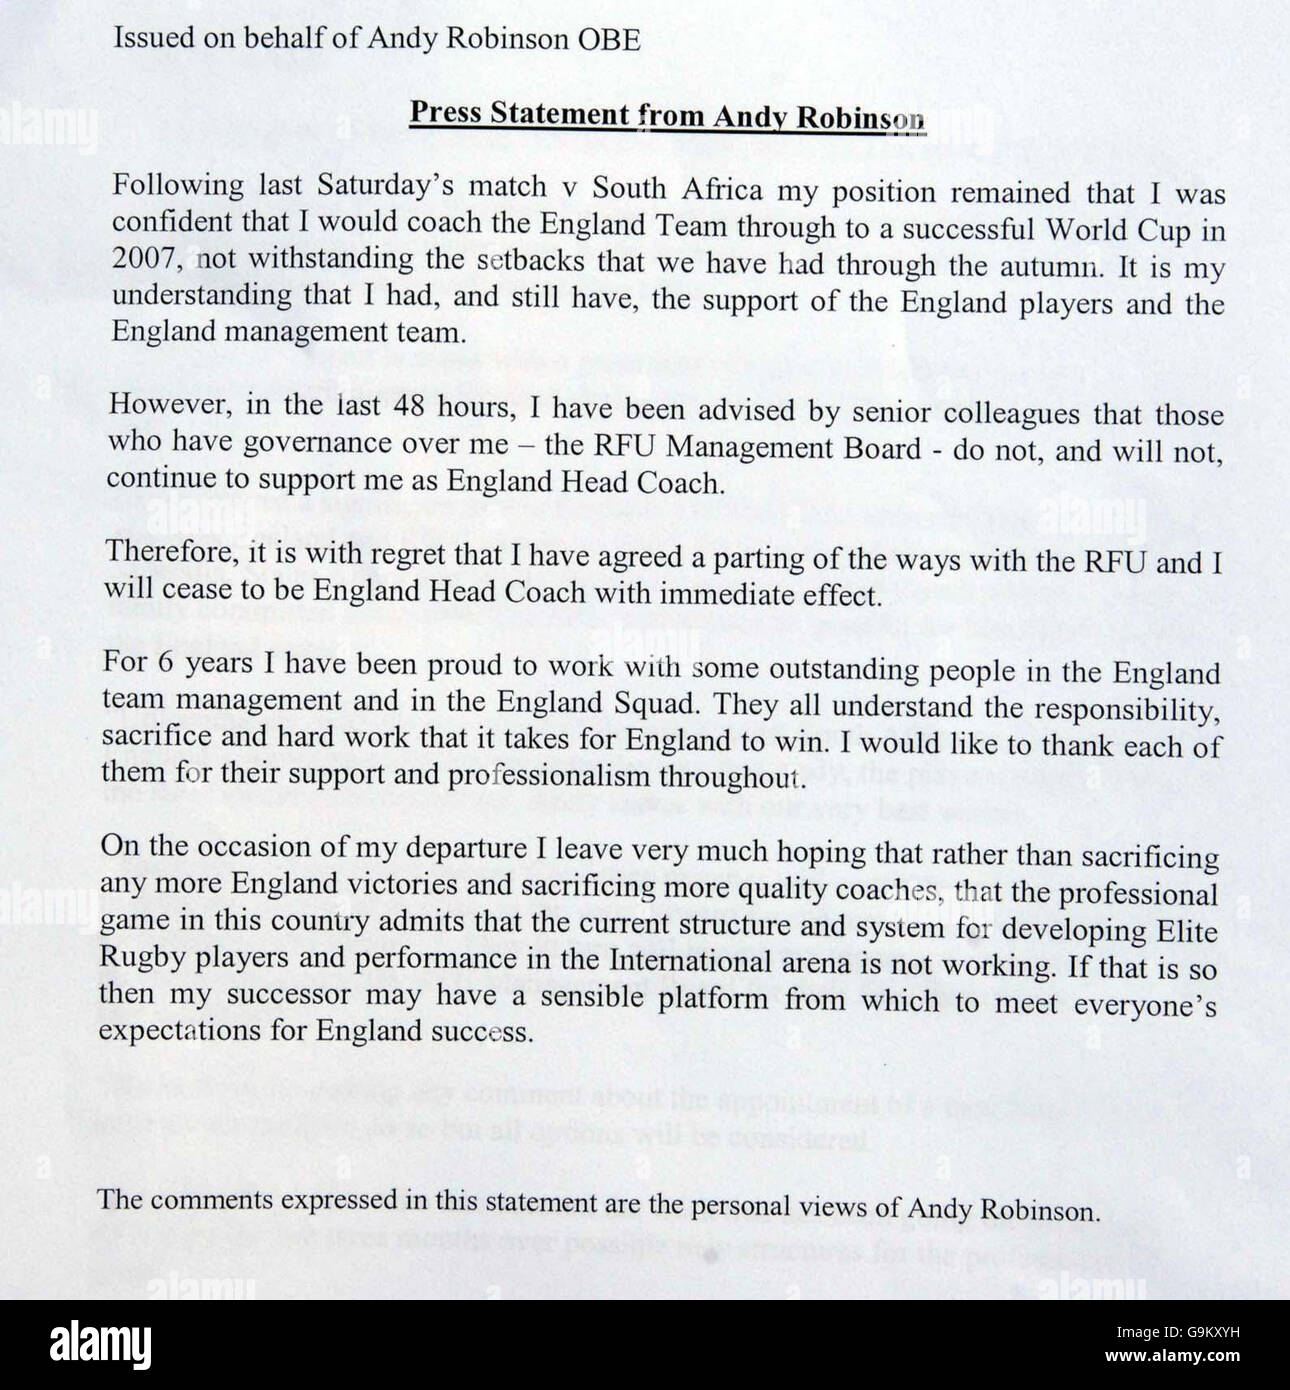 Rugby Union - England Cheftrainer Andy Robinson tritt zurück - Rugby House - Twickenham. Presseerklärung des englischen Cheftrainers Andy Robinson im Rugby House, Twickenham, London. Stockfoto